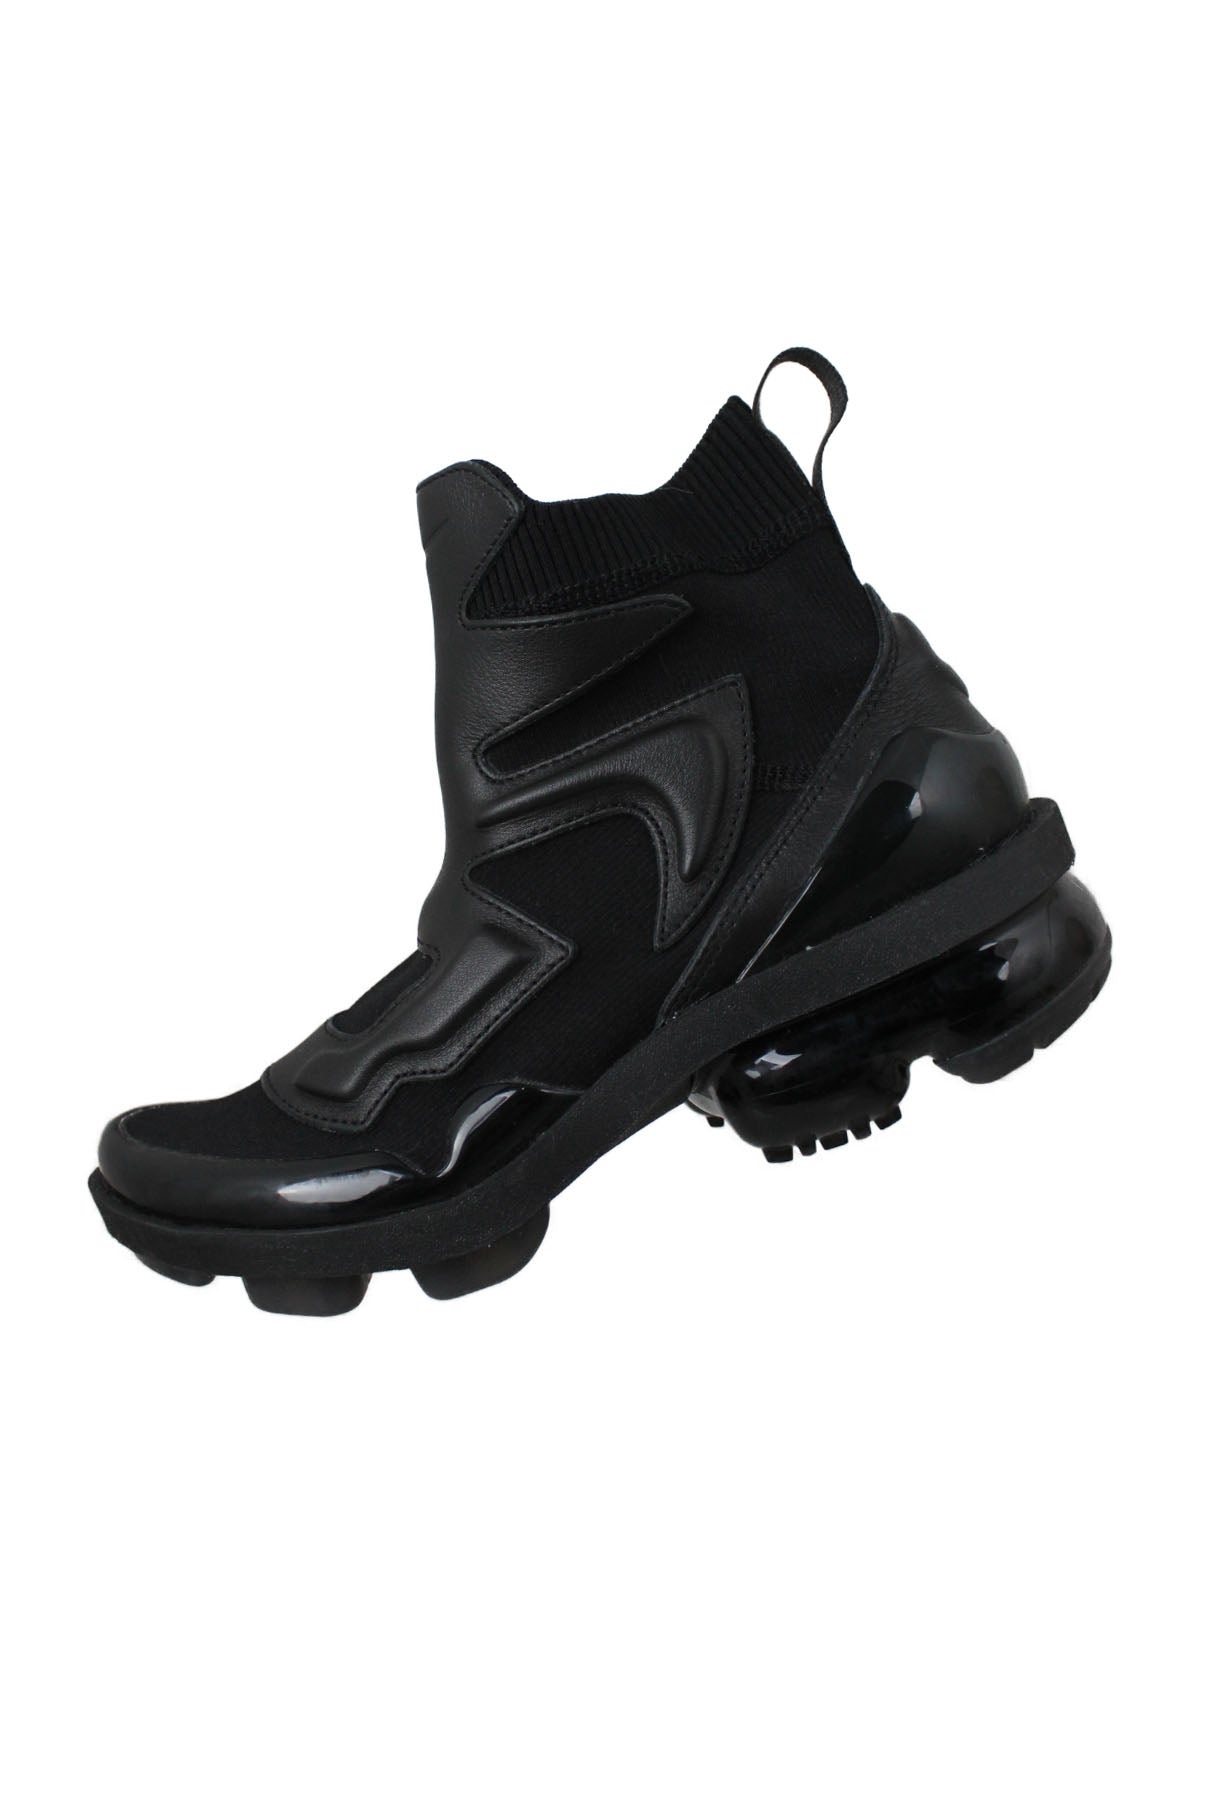 side angle of nike black vapormax light 2 high top boot sneaker. 